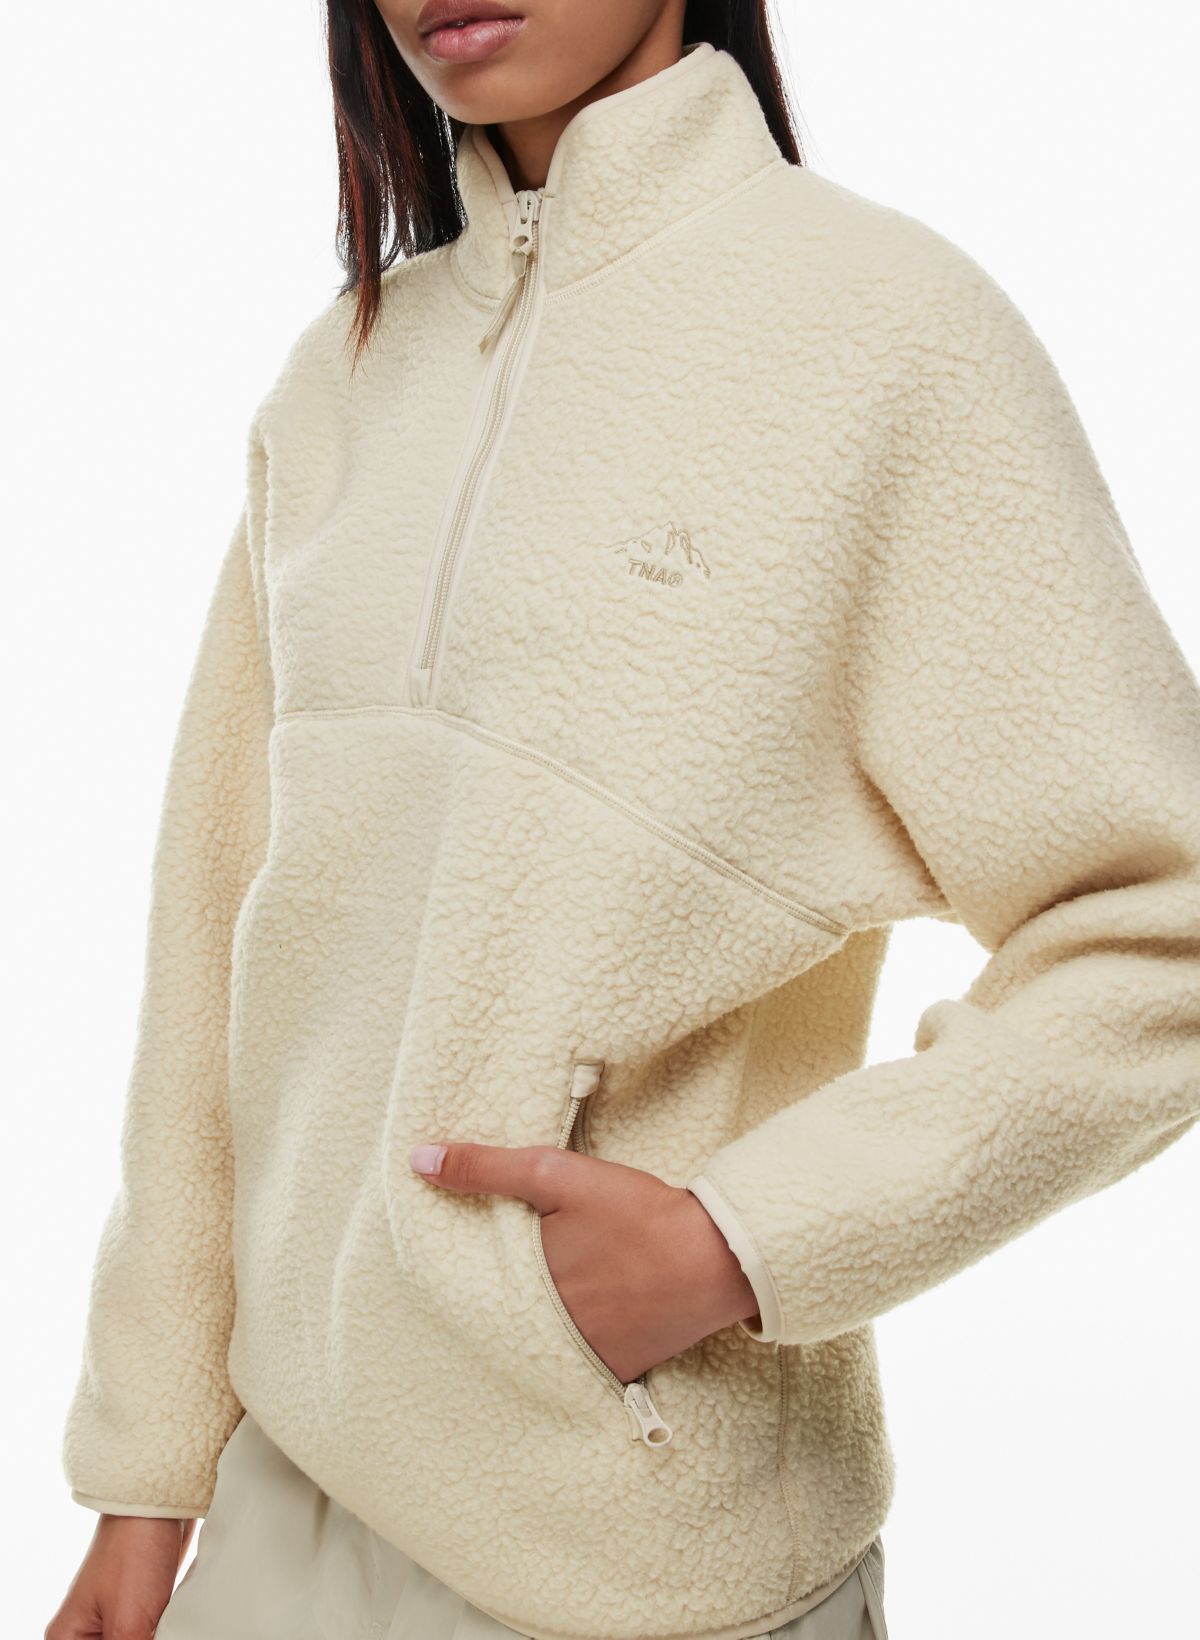 polartec® thermal pro® 1/2 zip hip sweater